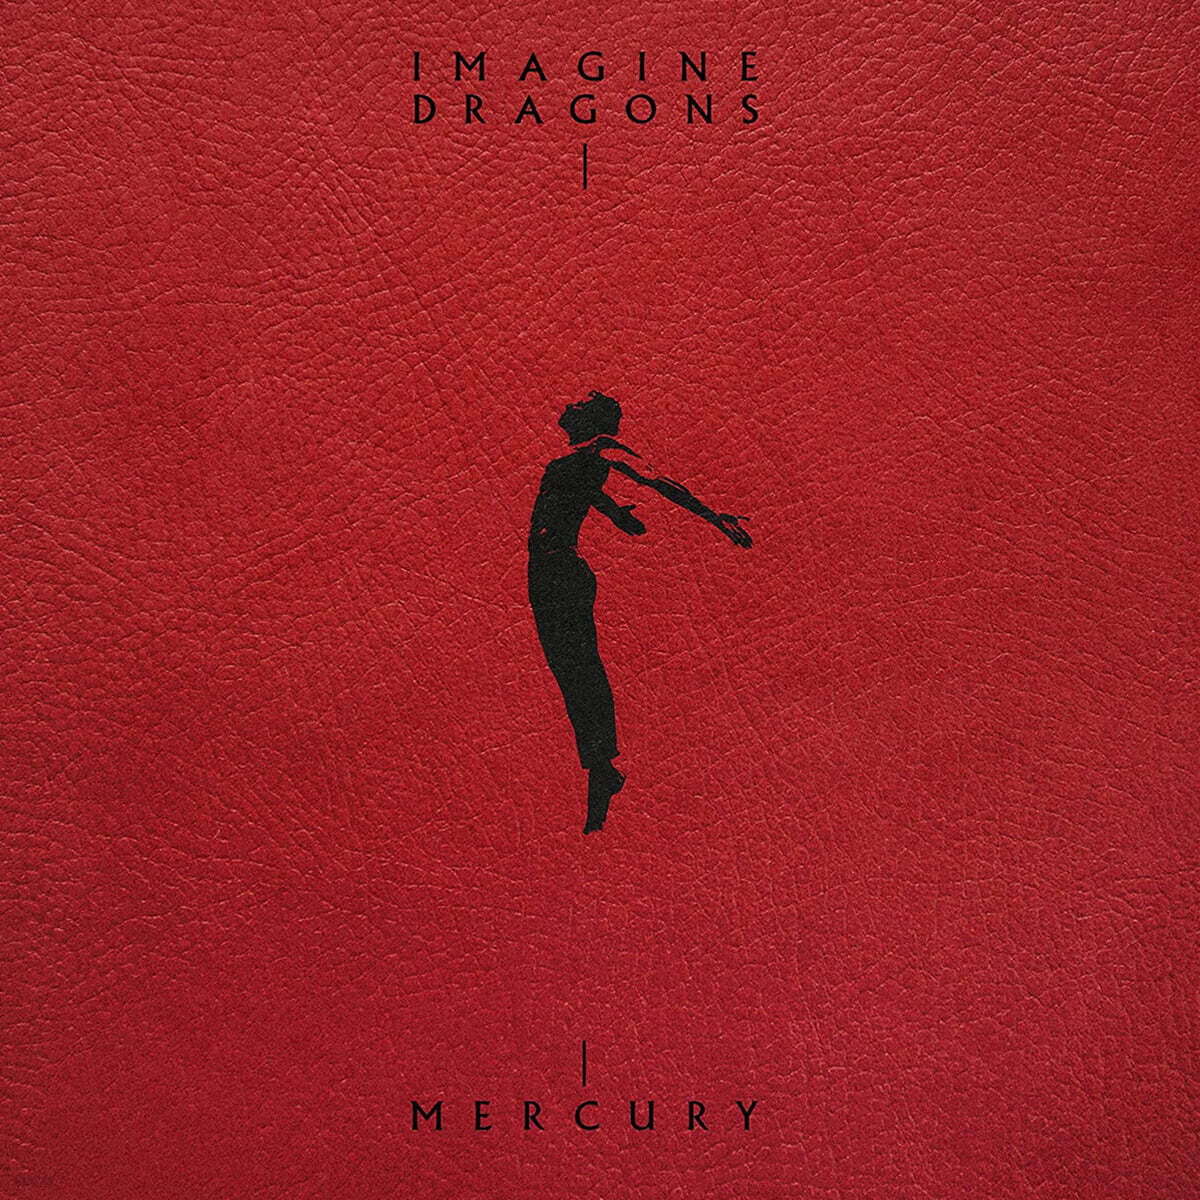 Imagine Dragons (이매진 드래곤스) - 6집 Mercury - Acts 2 [2LP]